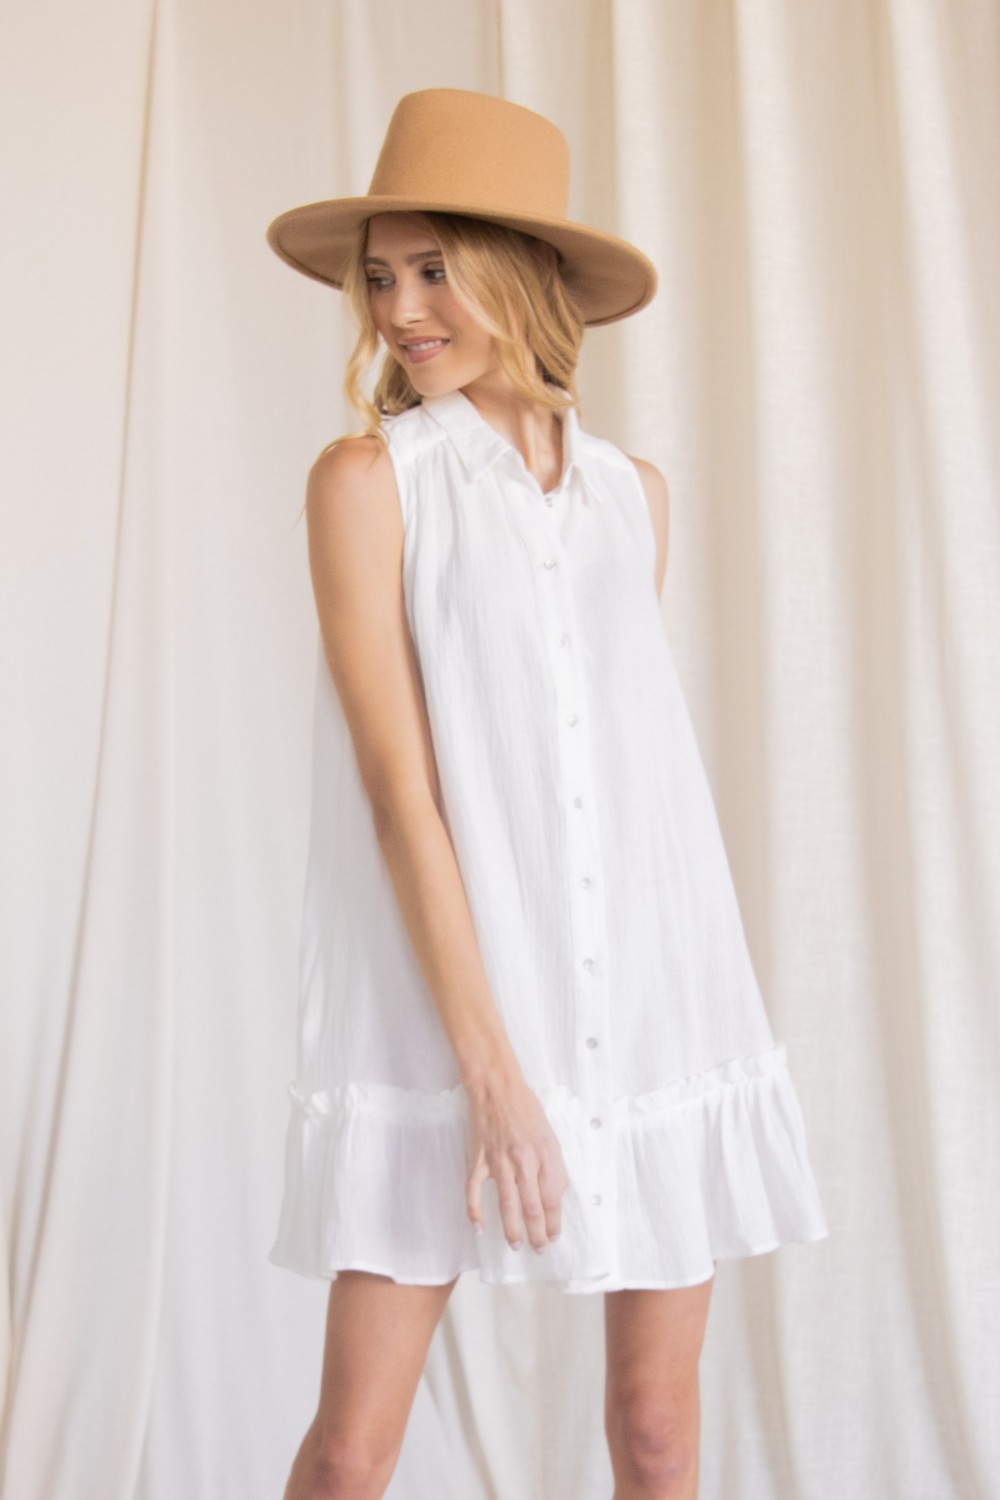 Summer Girls Casual Fashion White Dresses Cotton Ruffle Sleeveless